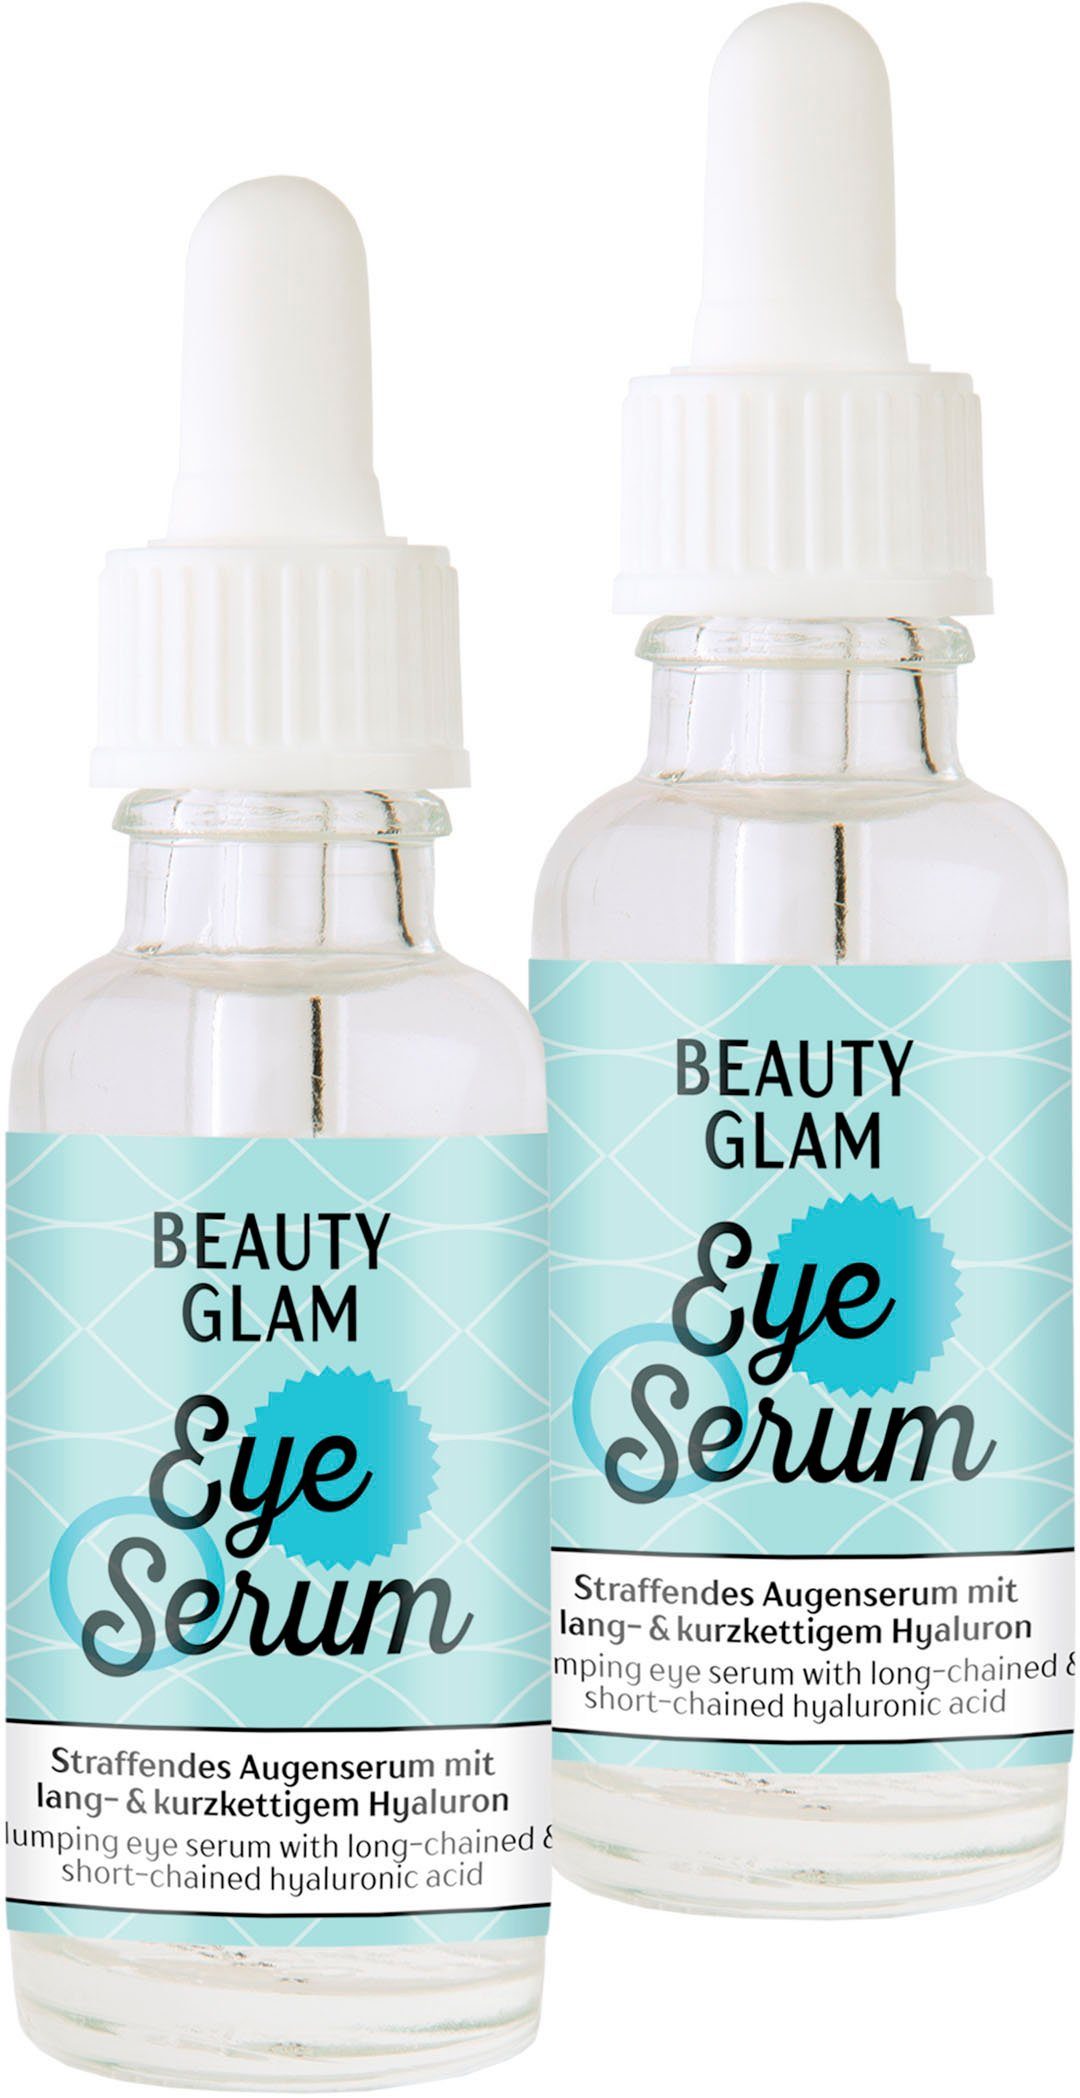 Augenserum Serum, BEAUTY 2 GLAM Eye